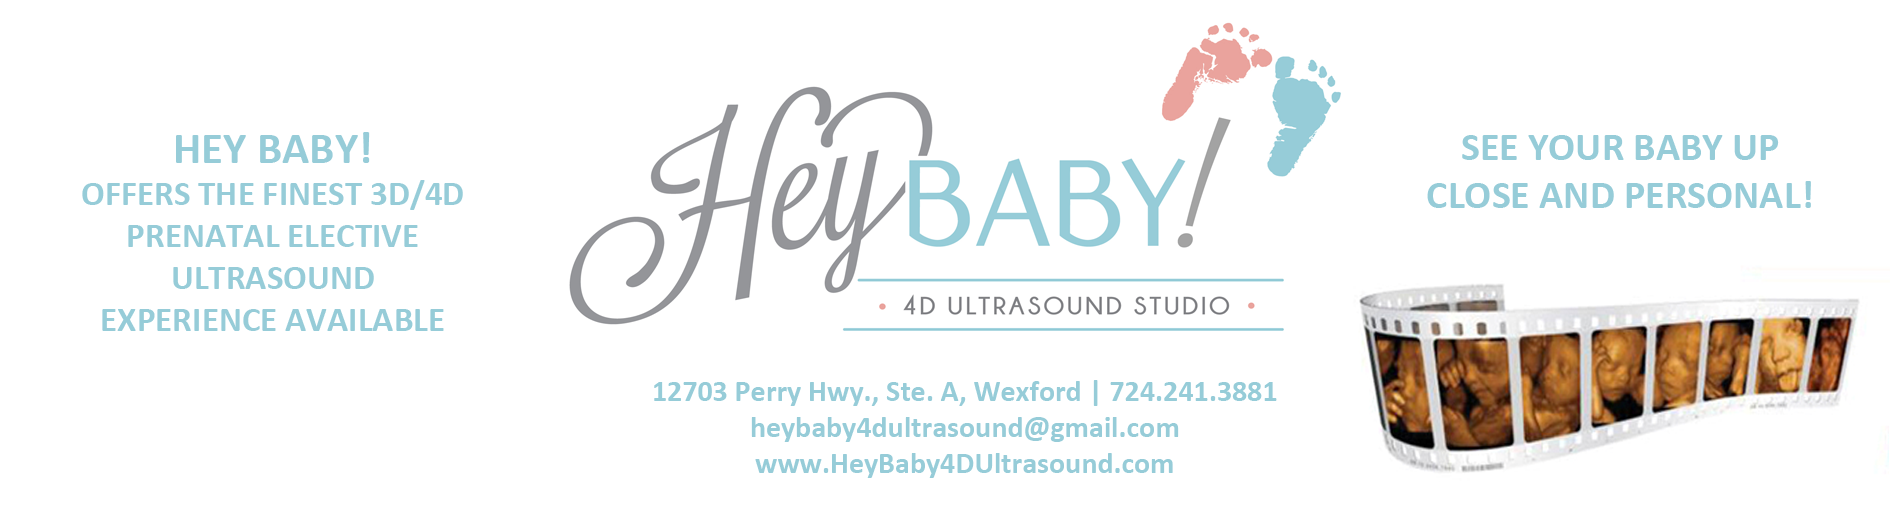 Hey Baby! 4D Ultrasound Studio